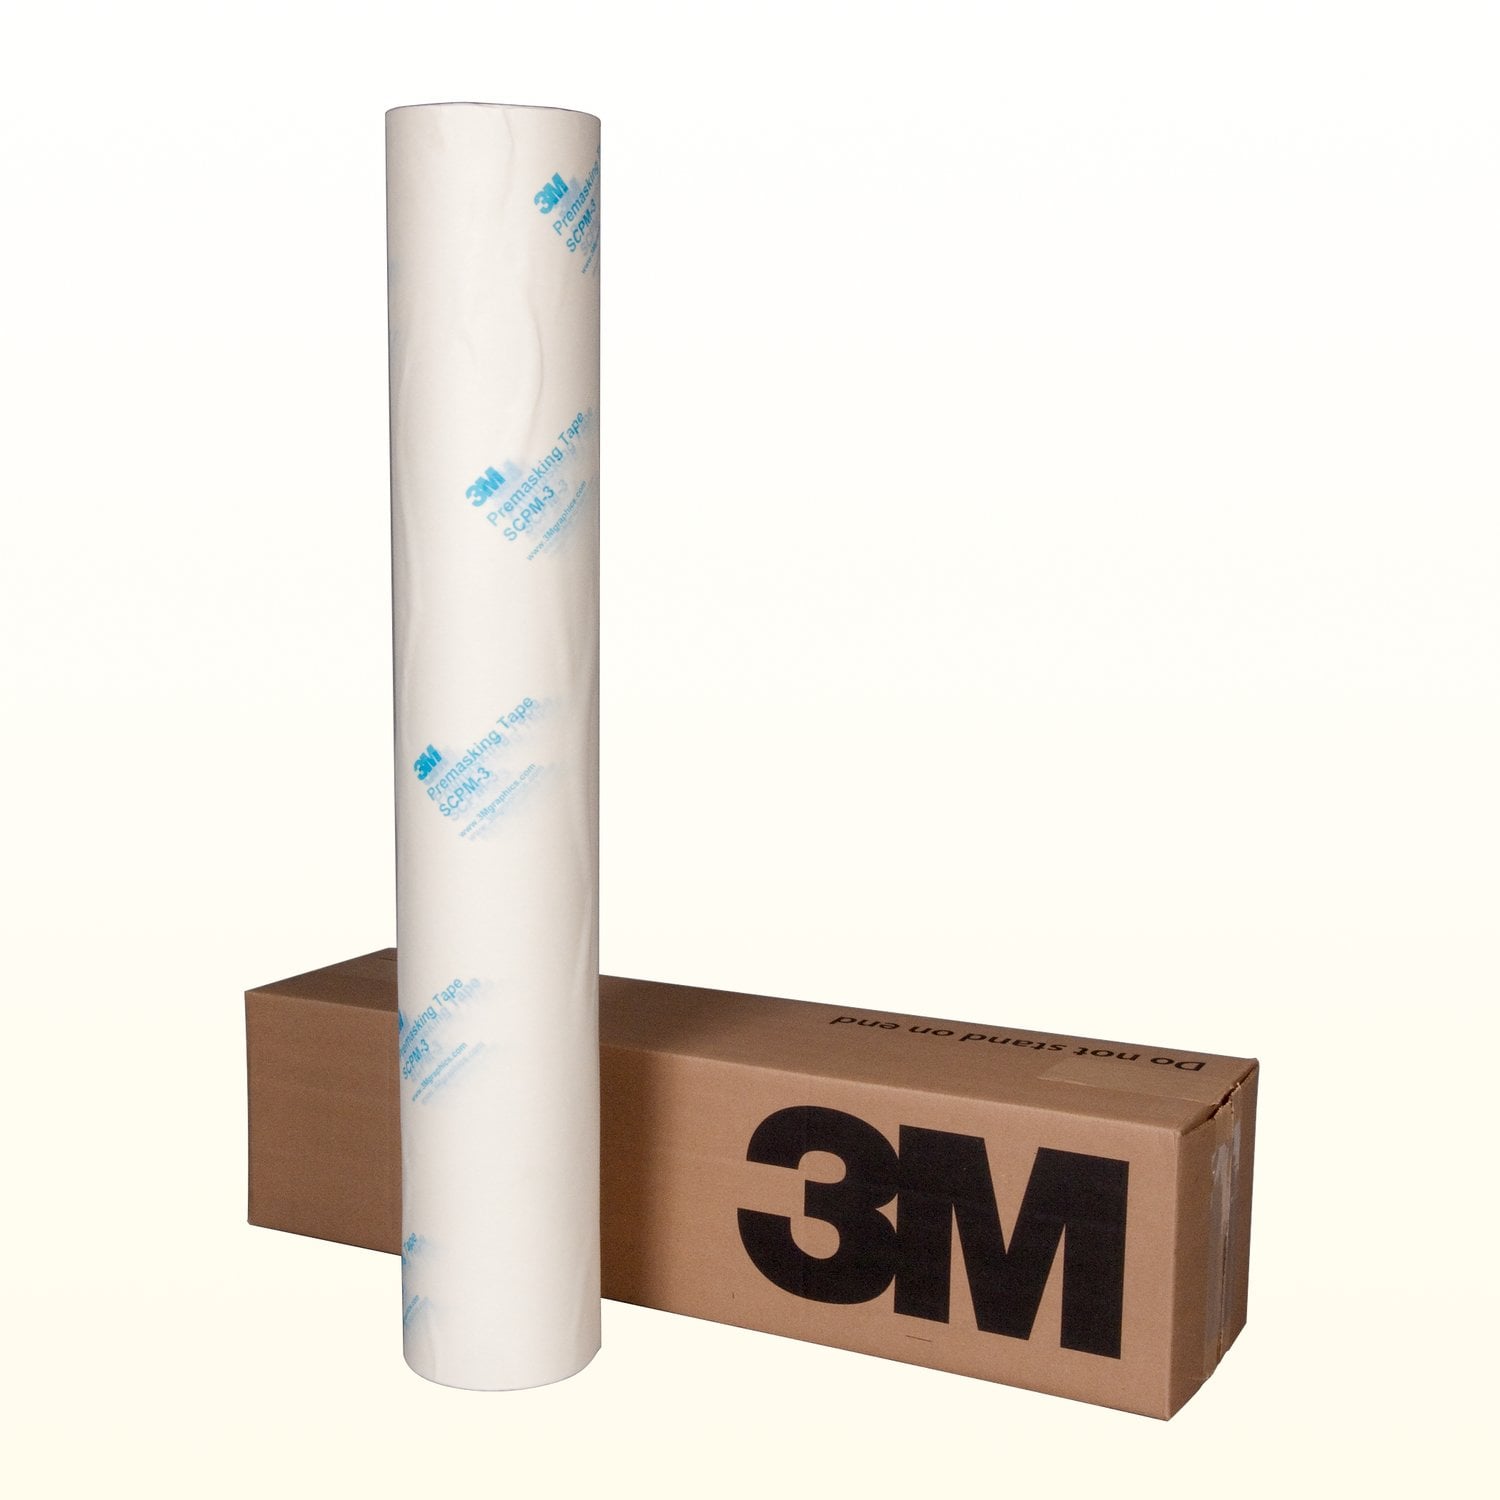 7010392281 - 3M Premasking Tape SCPM-3, 48 in x 250 yd, 1 Roll/Case